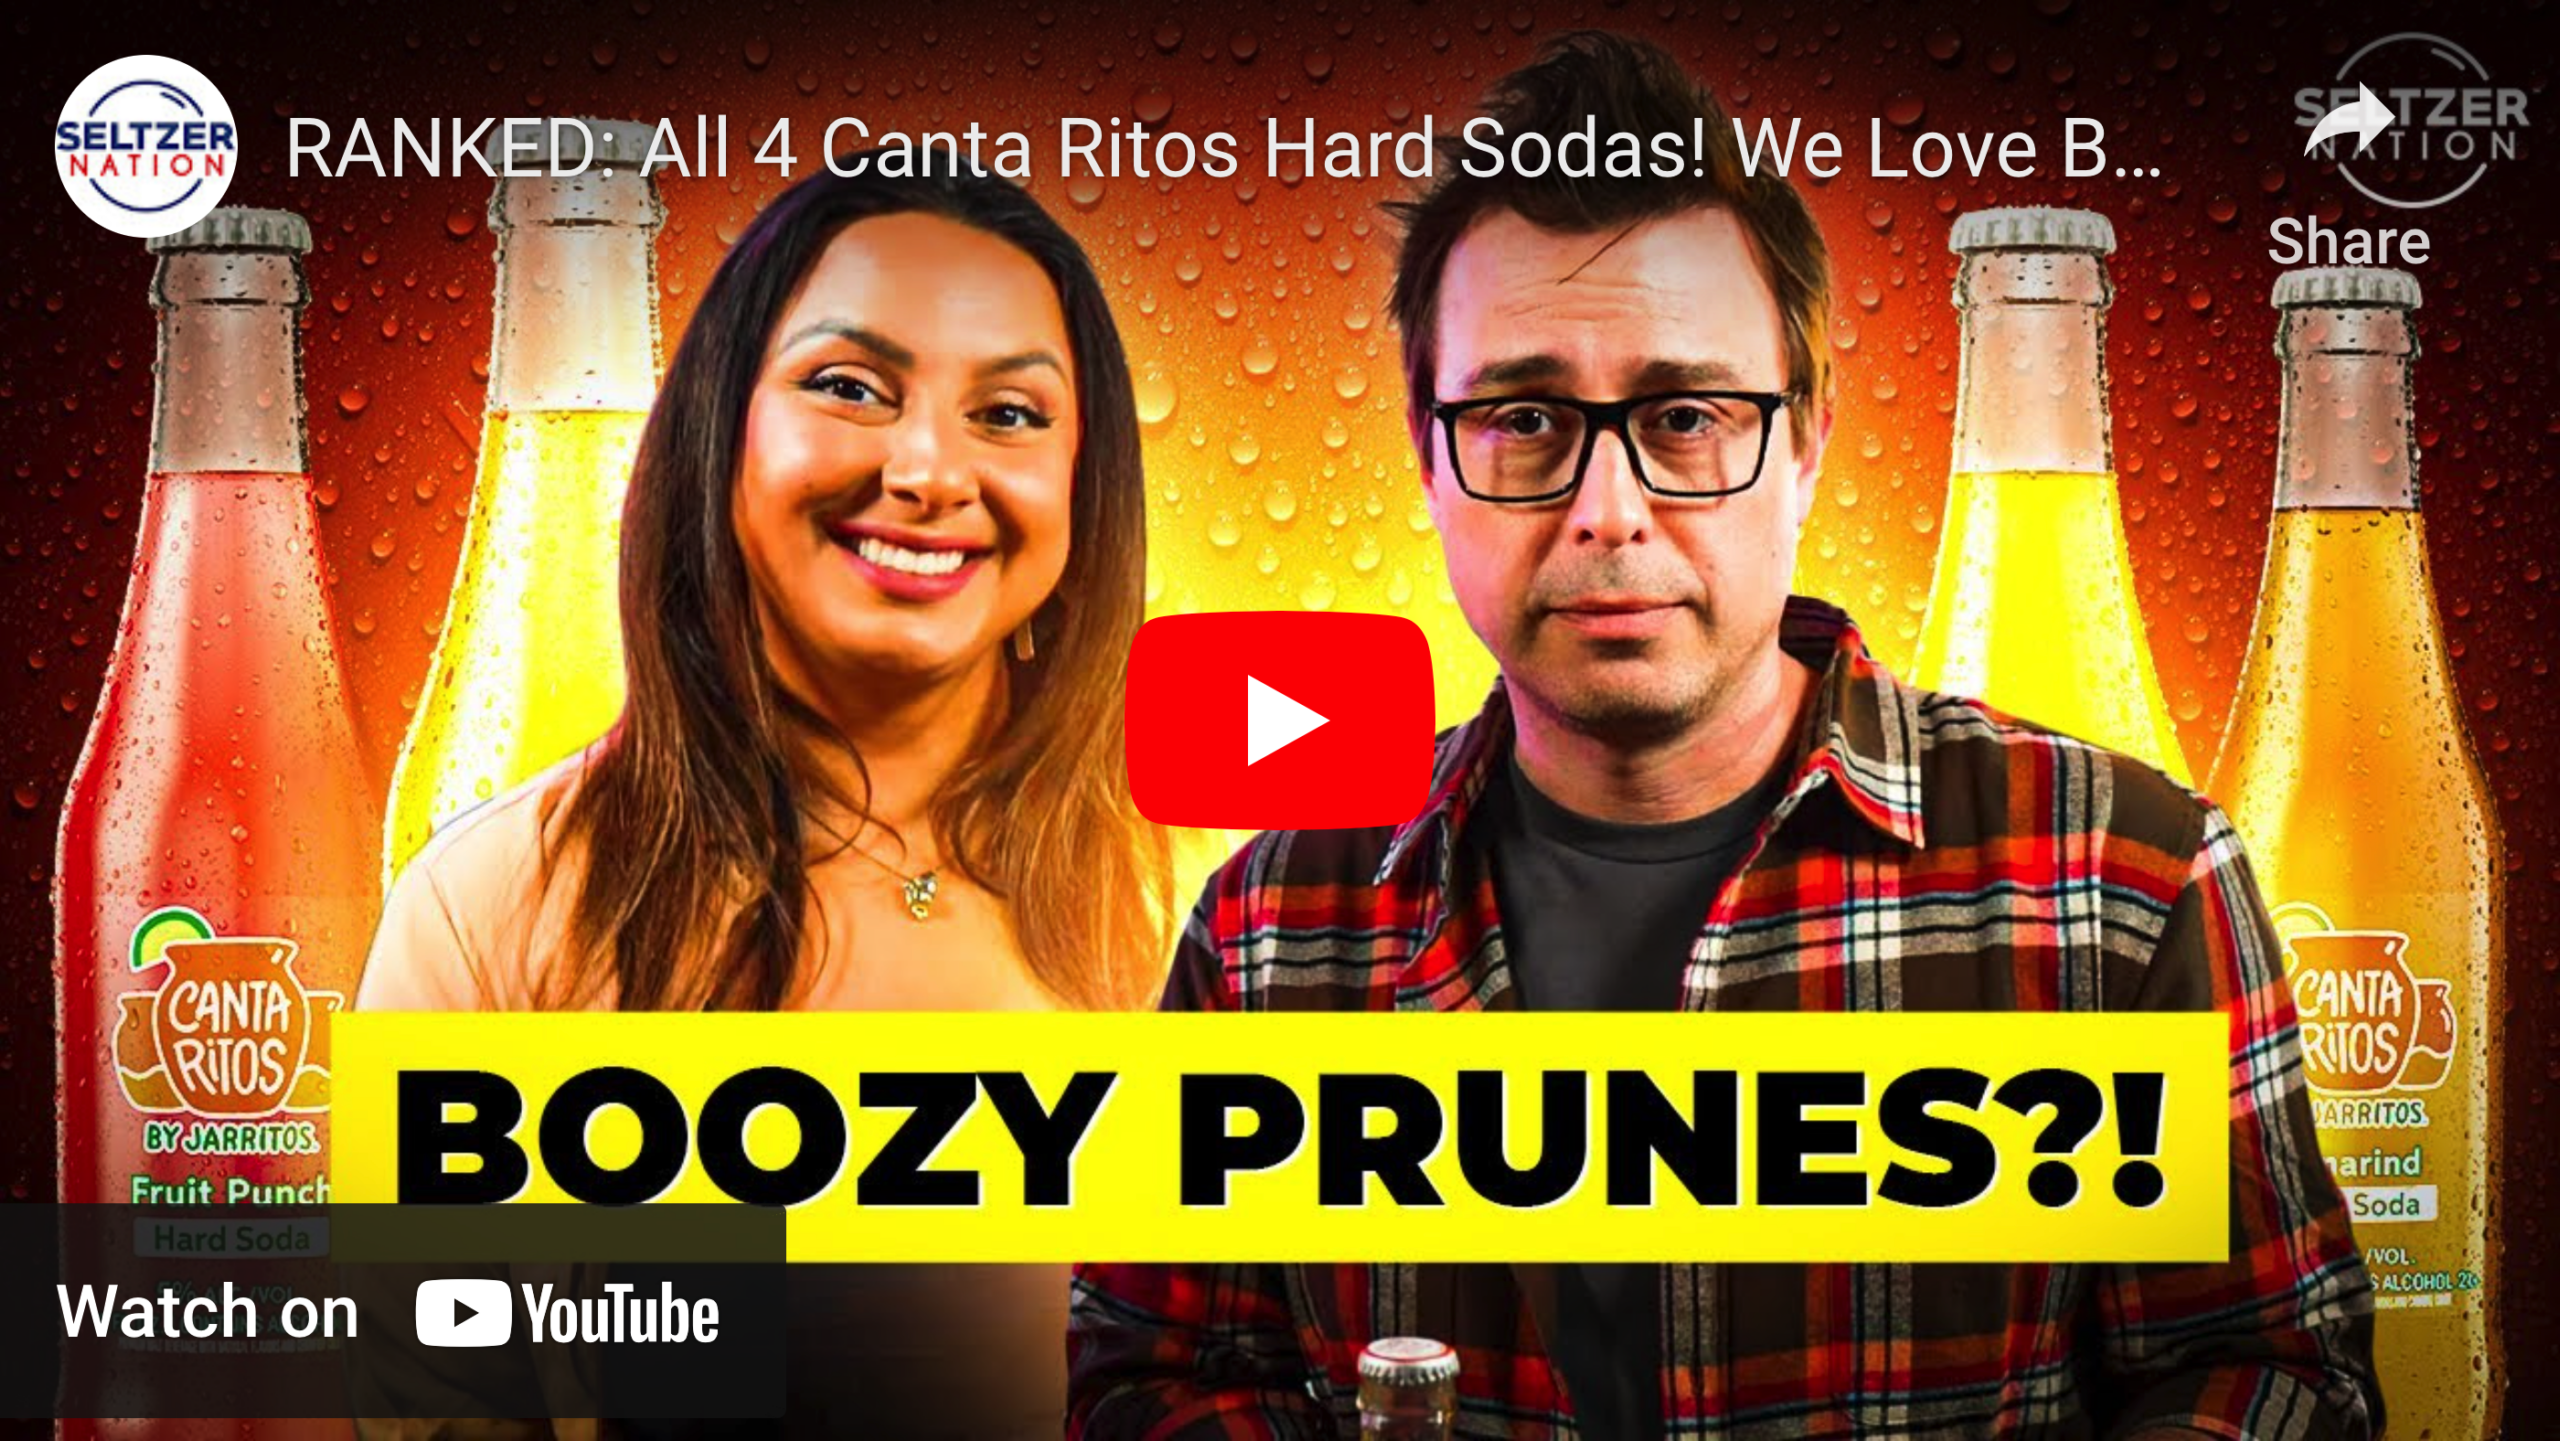 RANKED: All 4 Cantaritos Hard Sodas! We Love Boozy Prune?!